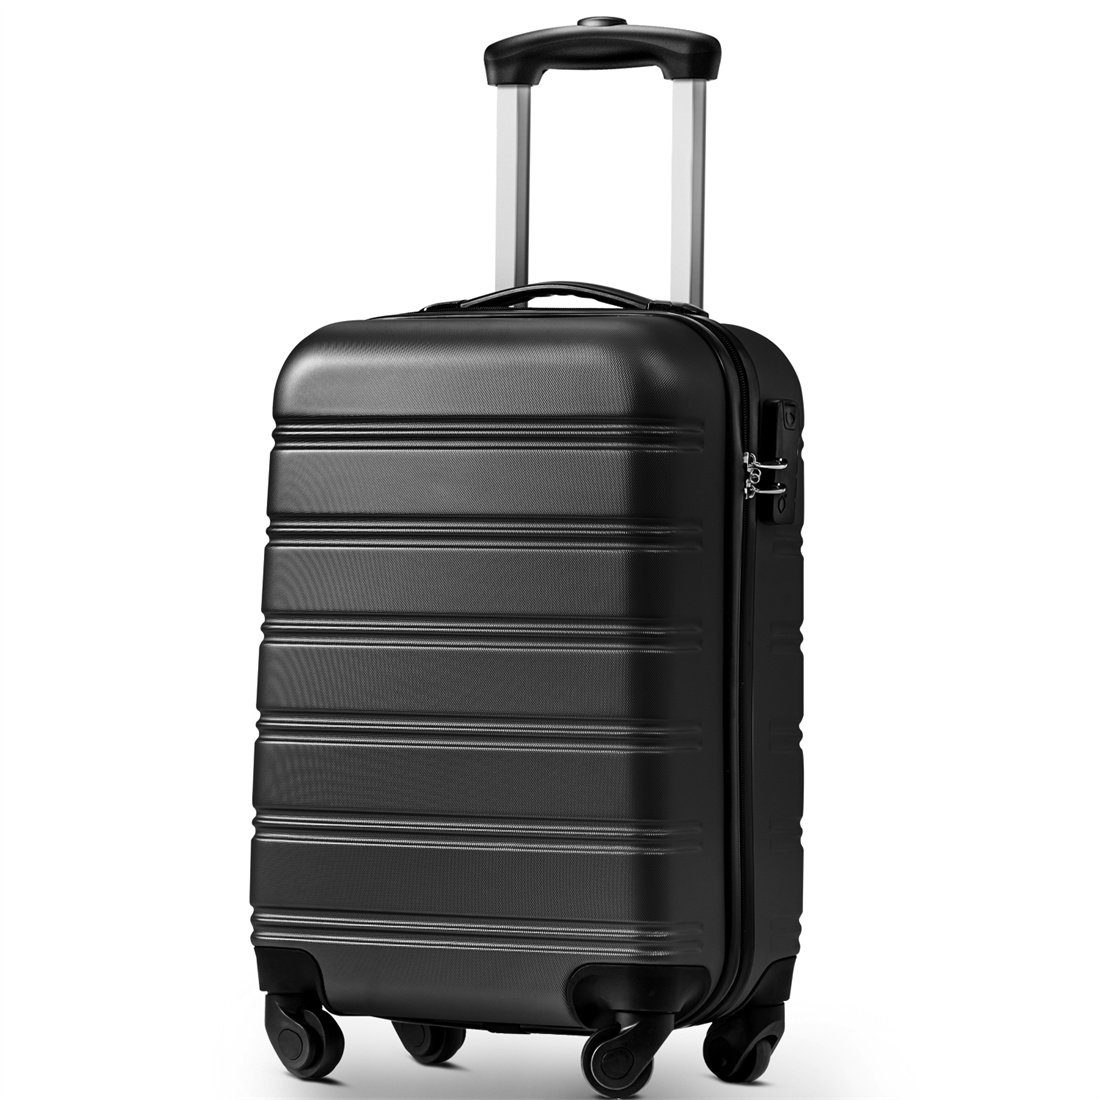 Koffer schwarz DÖRÖY Hartschalen-Koffer,Rollkoffer,Reisekoffer,55*36*22.5cm,